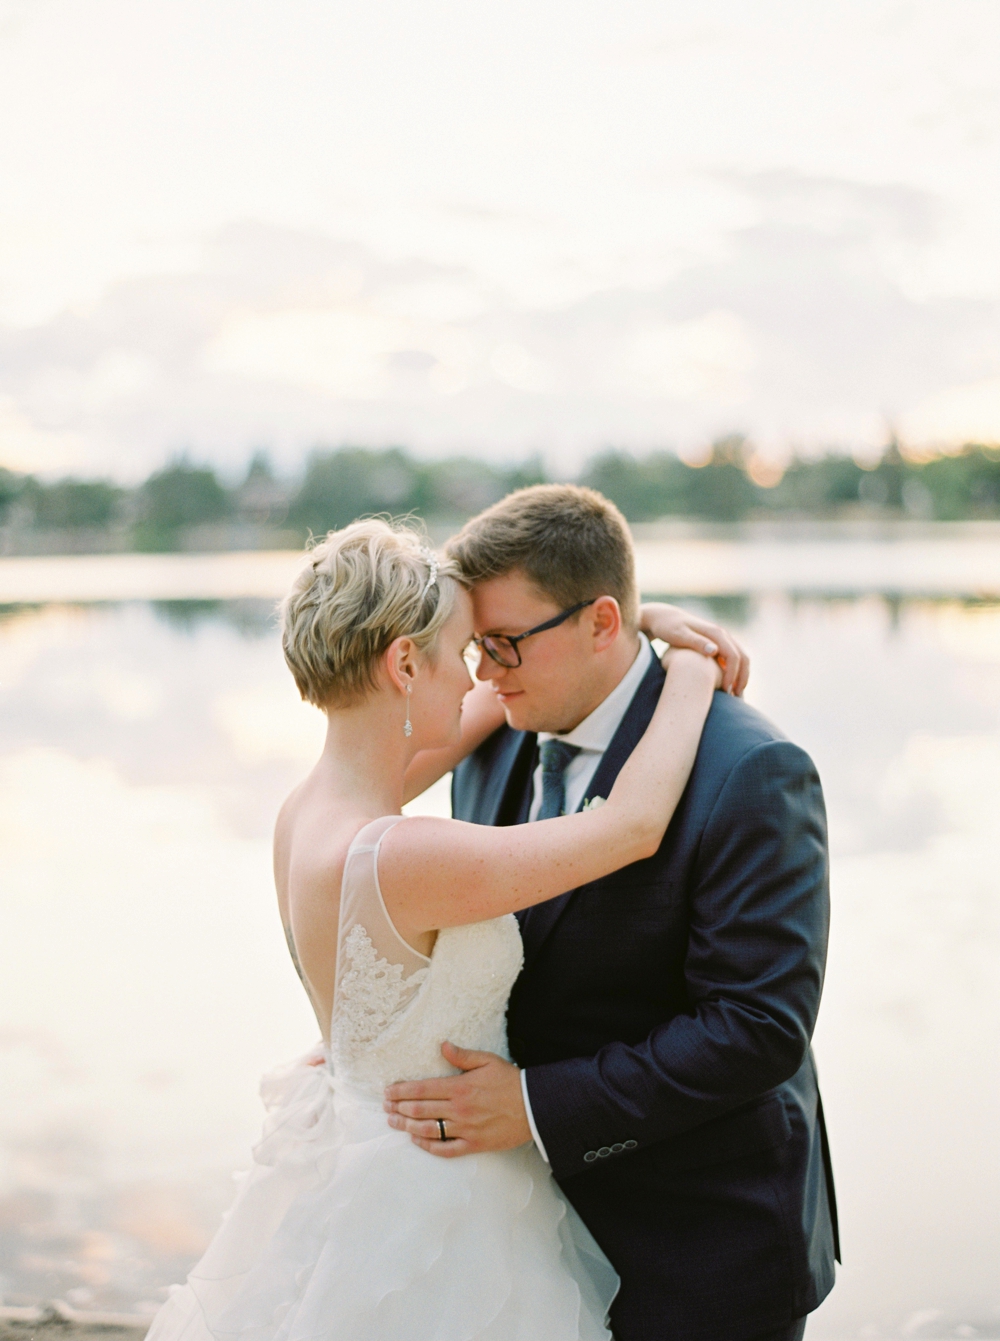 Calgary wedding photographers | The lake house wedding | The Lake House on Lake Bonavista Bride and groom photos with ducks | Justine Milton Photography